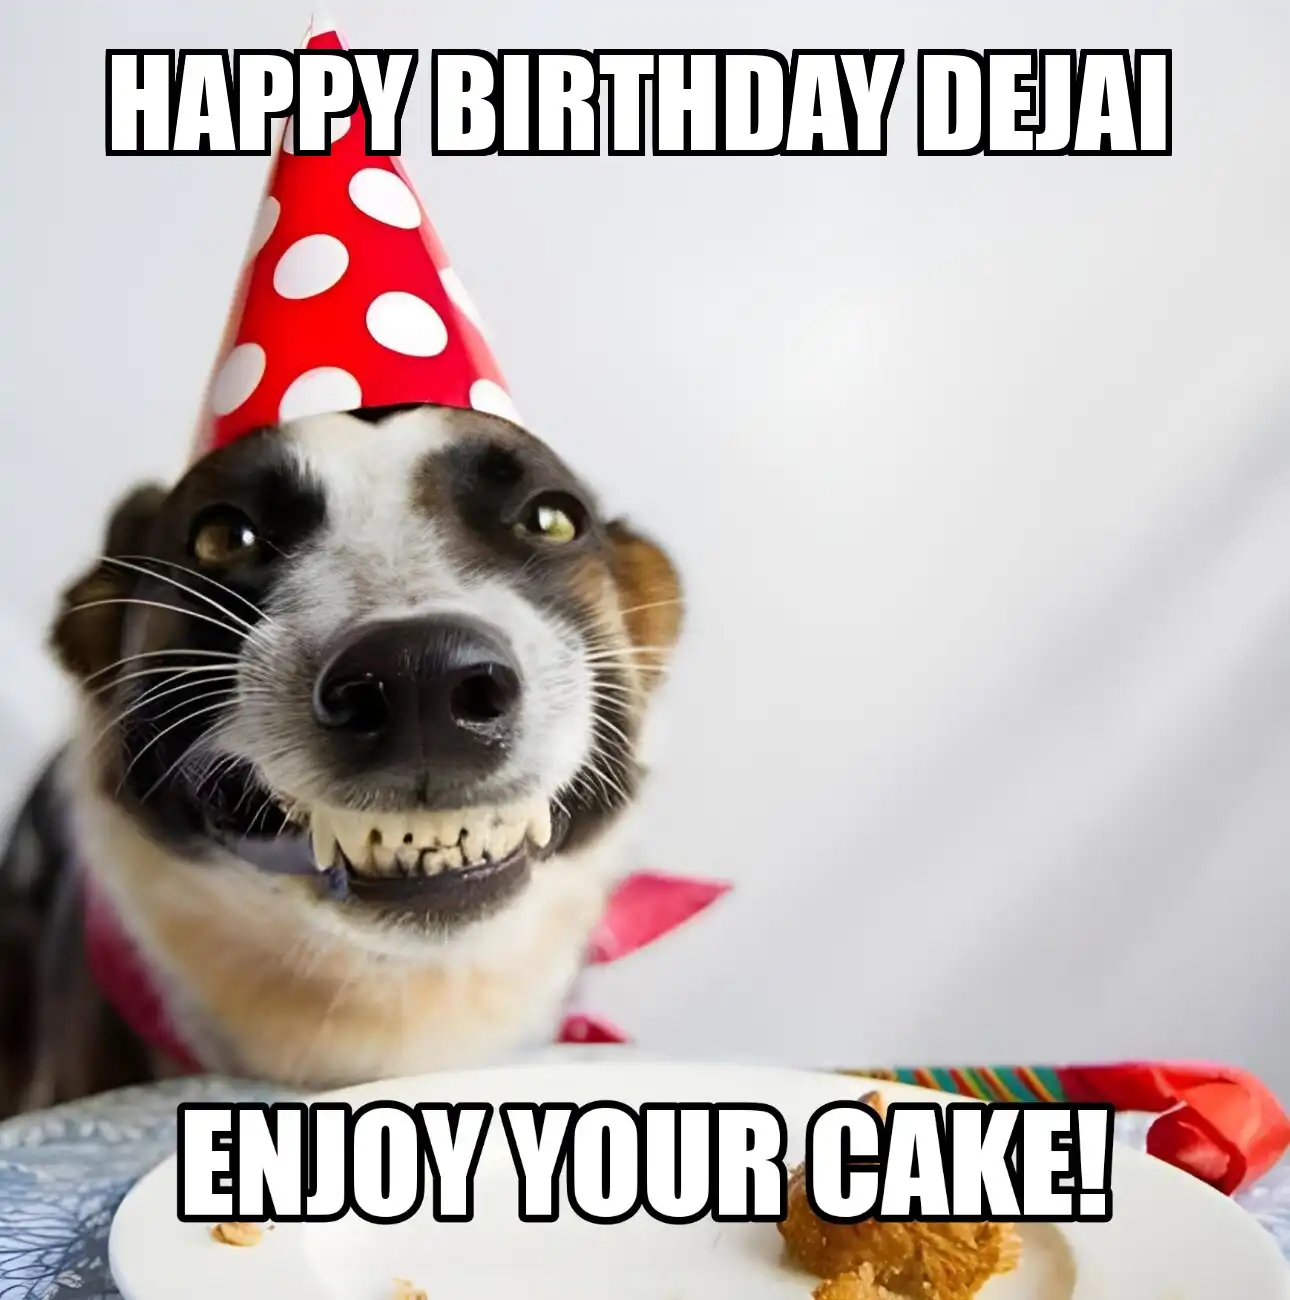 Happy Birthday Dejai Enjoy Your Cake Dog Meme